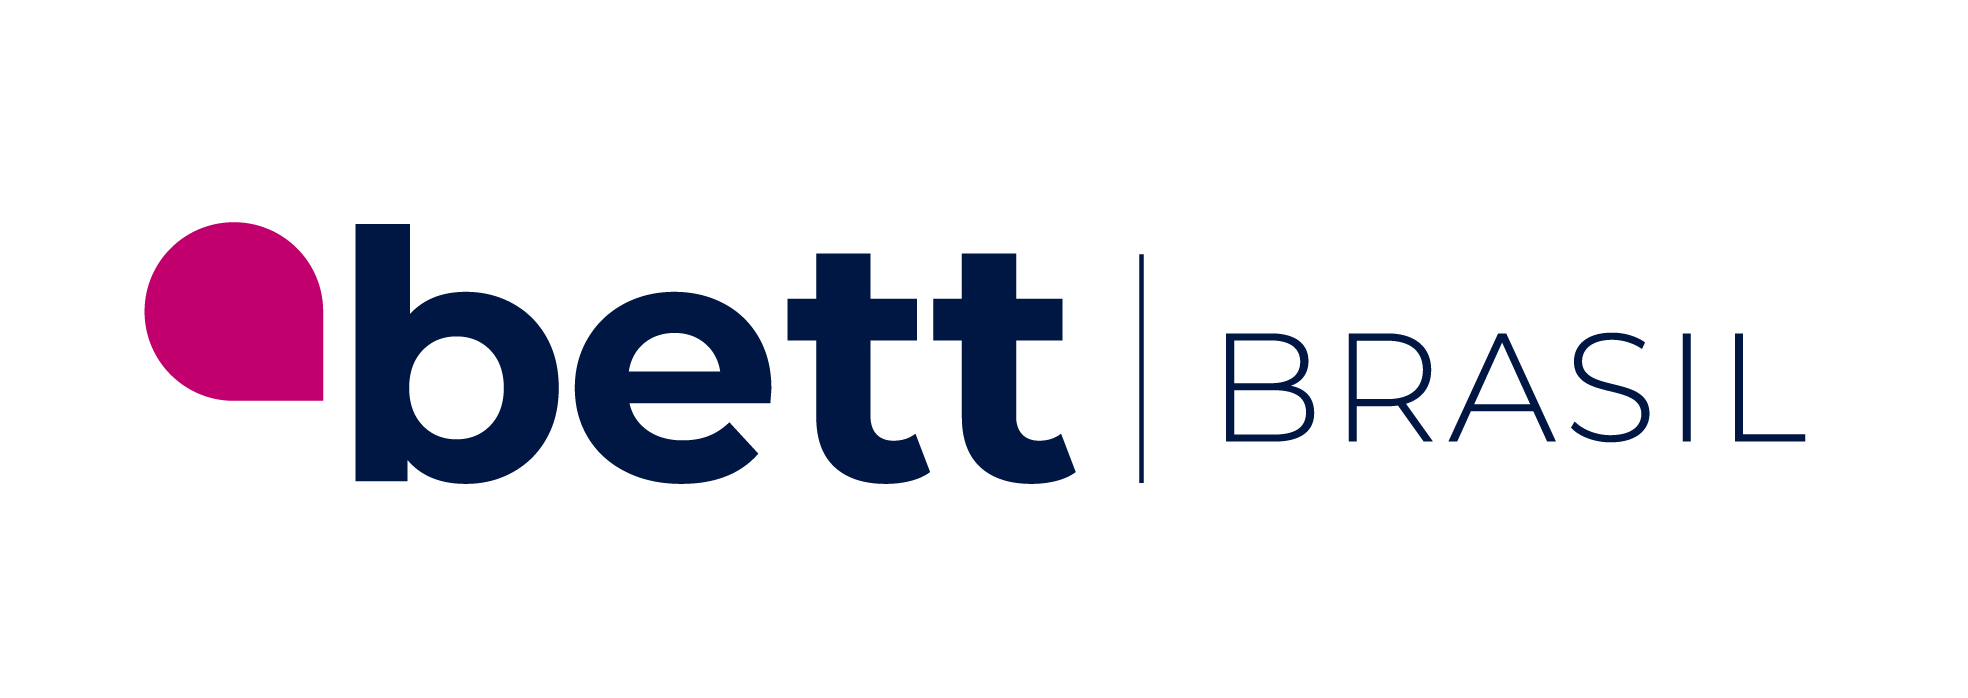 betteducar_logo